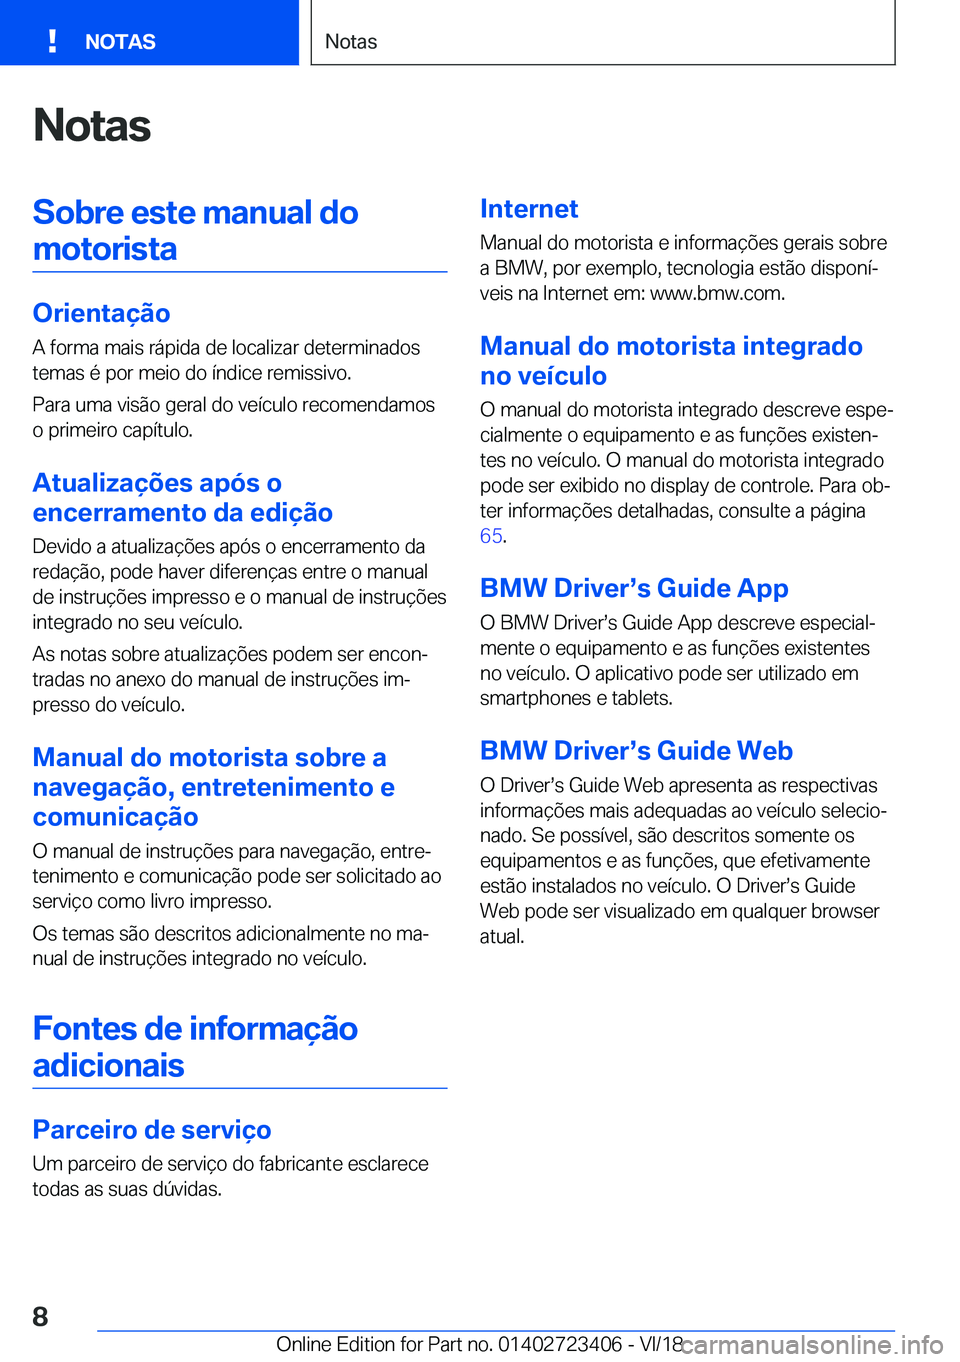 BMW 2 SERIES COUPE 2019  Manual do condutor (in Portuguese) �N�o�t�a�s�S�o�b�r�e��e�s�t�e��m�a�n�u�a�l��d�o�m�o�t�o�r�i�s�t�a
�O�r�i�e�n�t�a�